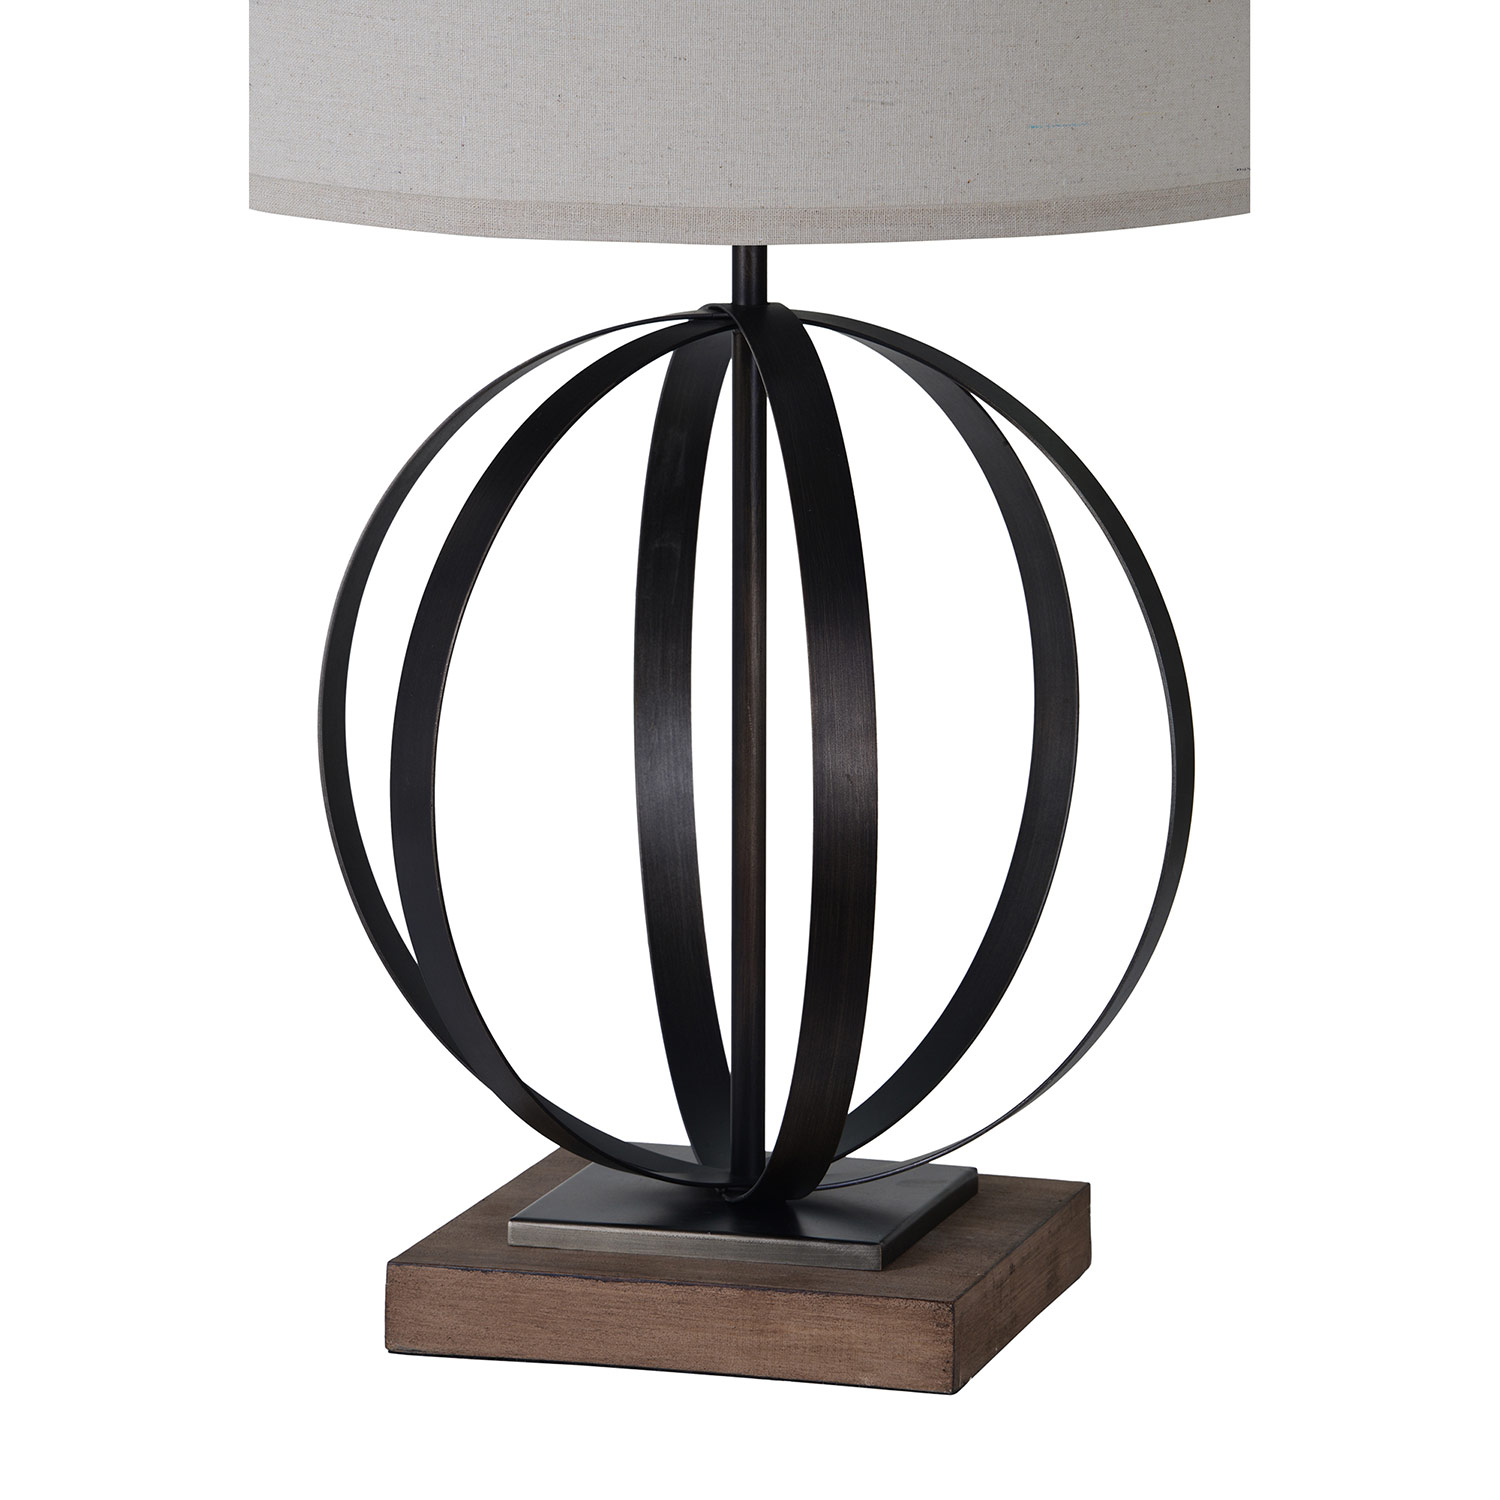 Ren-Wil Sawyer Table Lamp - Wood Grain